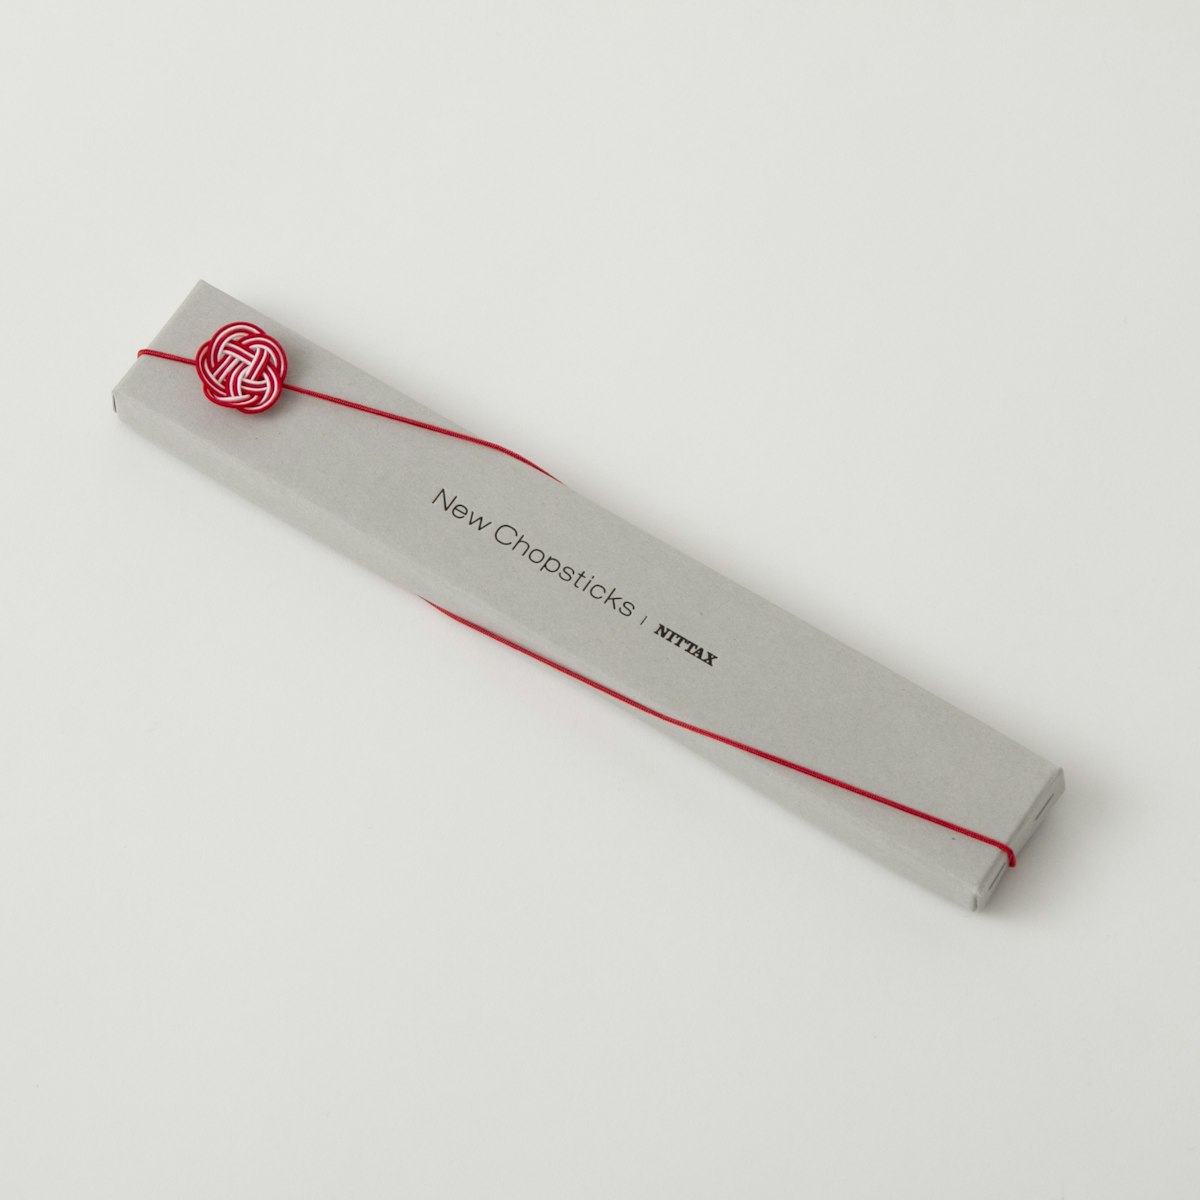 New Chopsticks 1膳用ギフトパッケージ